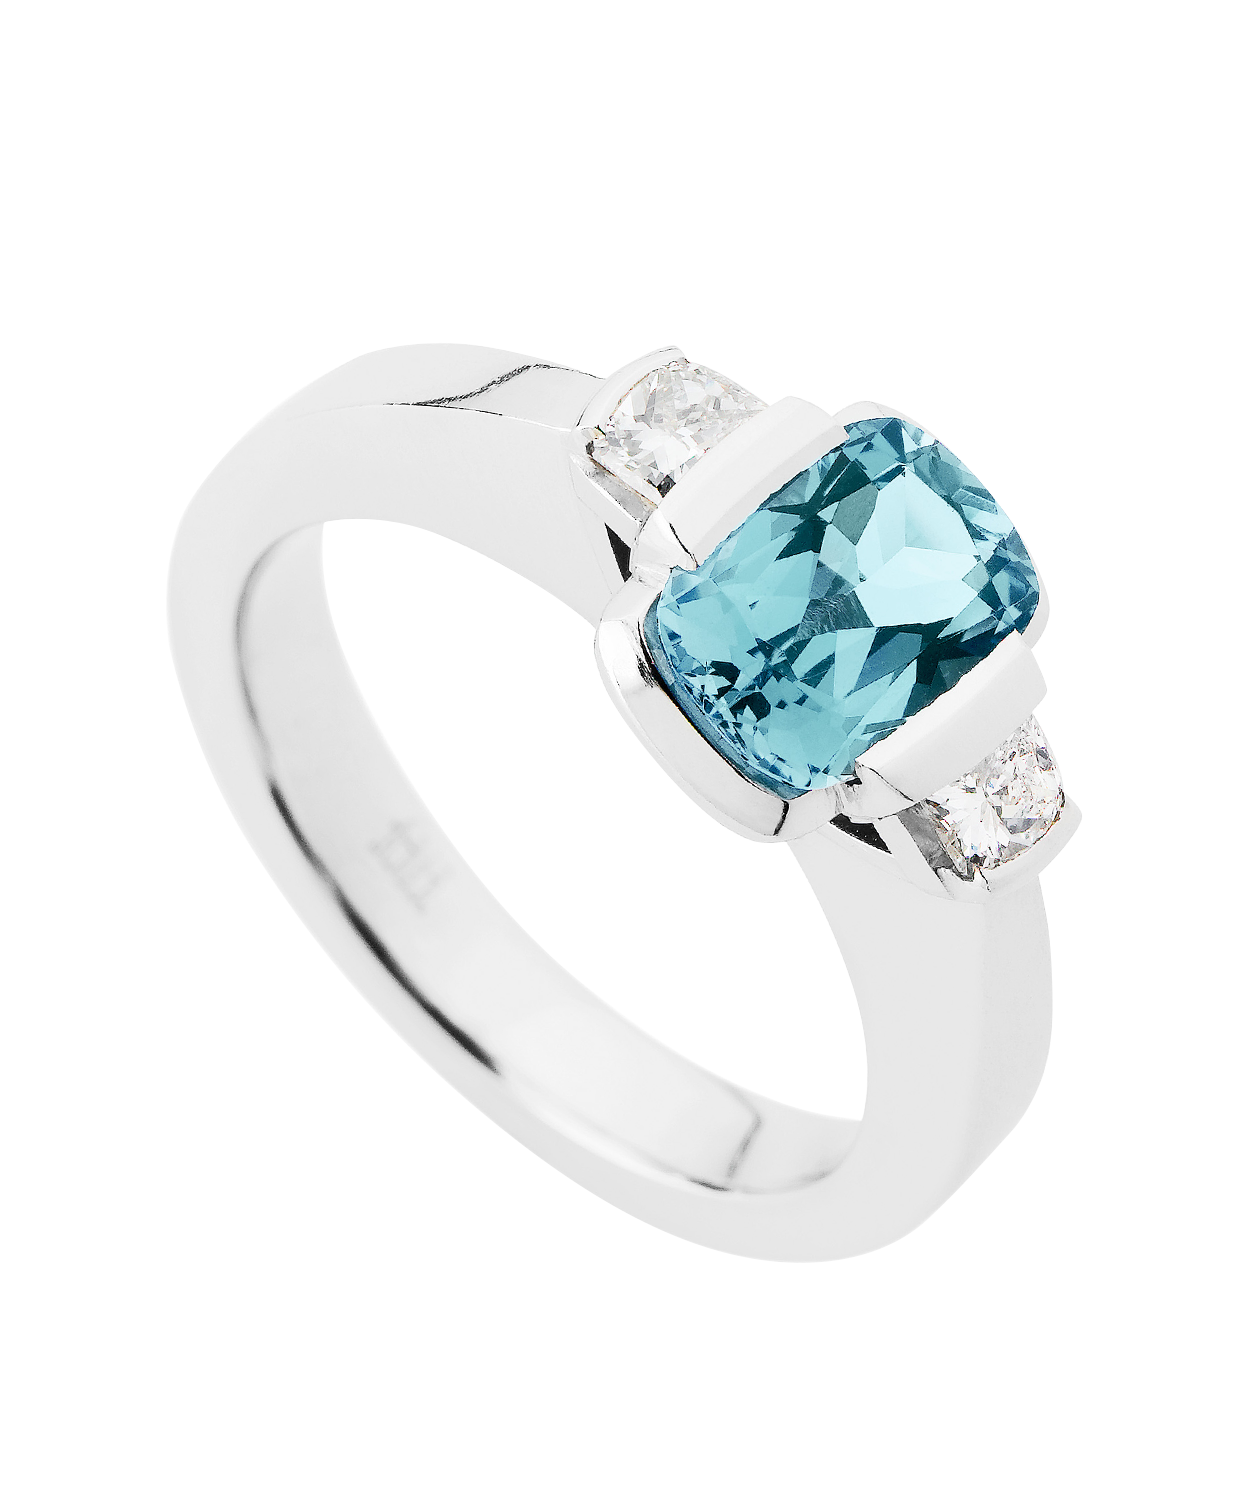 Cushion Cut Aquamarine Gemstone Ring at Rs 38000 in Surat | ID:  2852998197348